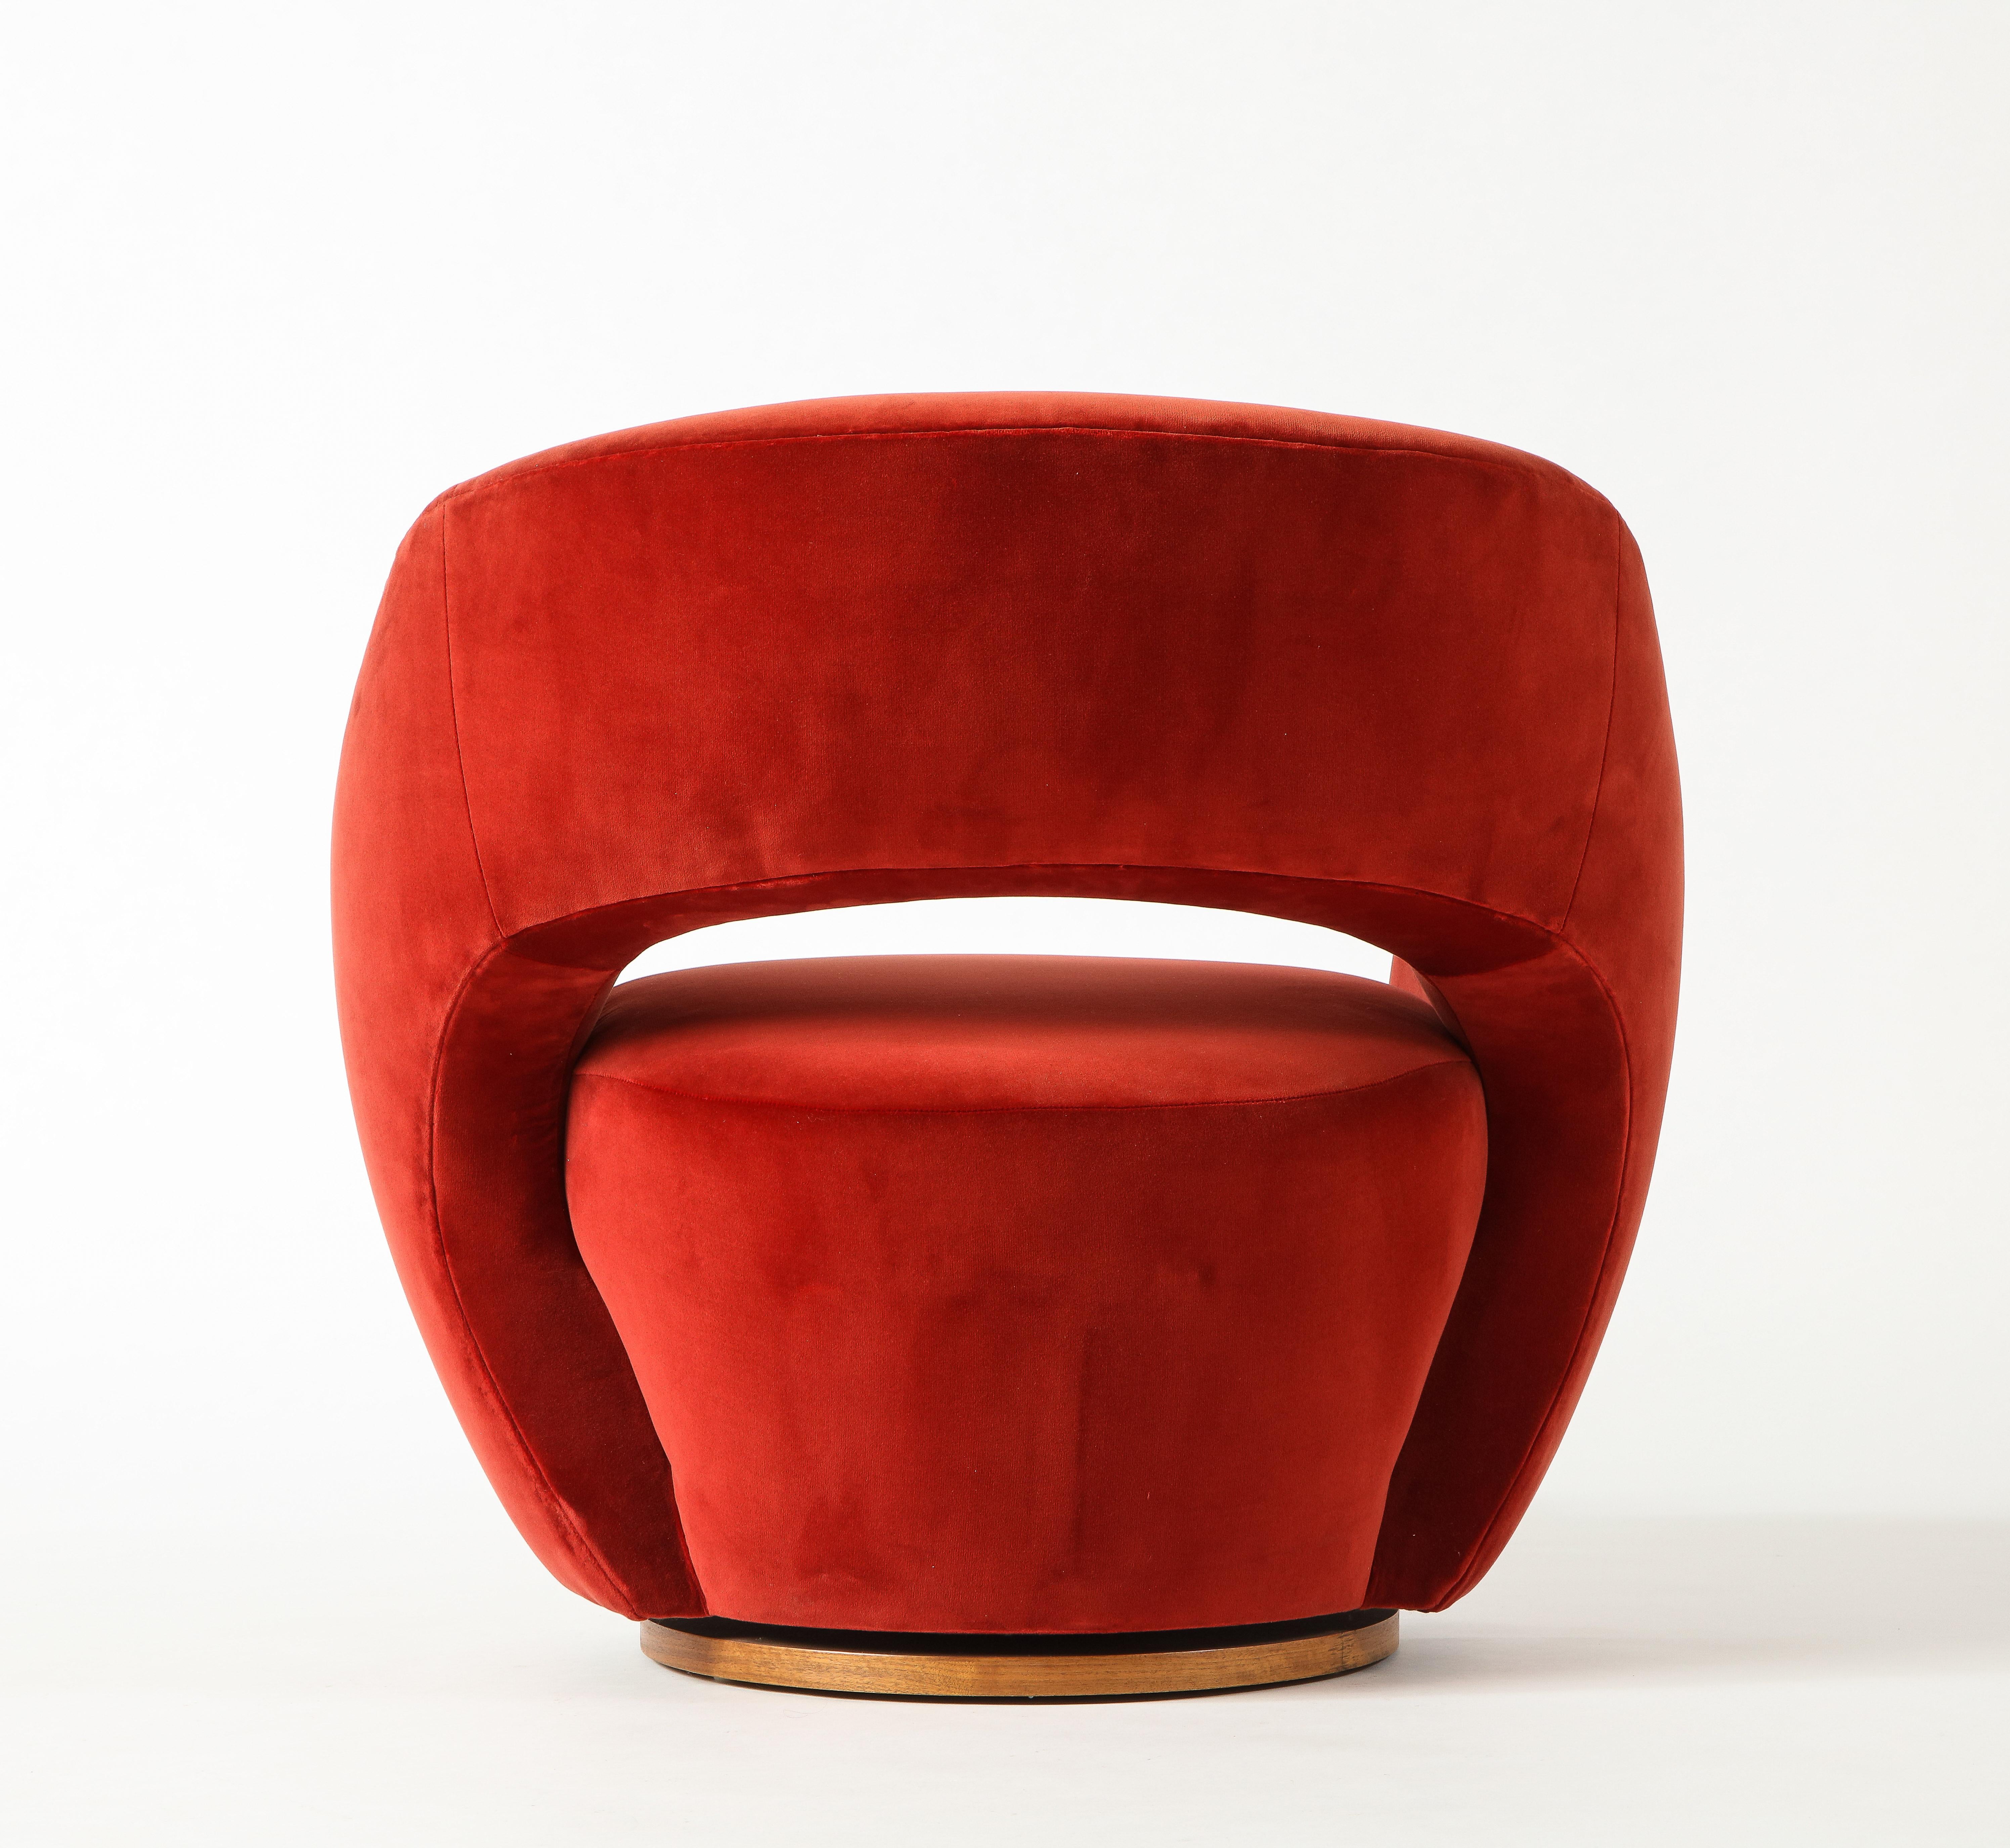 Vladimir Kagan Wysiwyg Chair with Red Upholstery & Natural Walnut Swivel Base 2